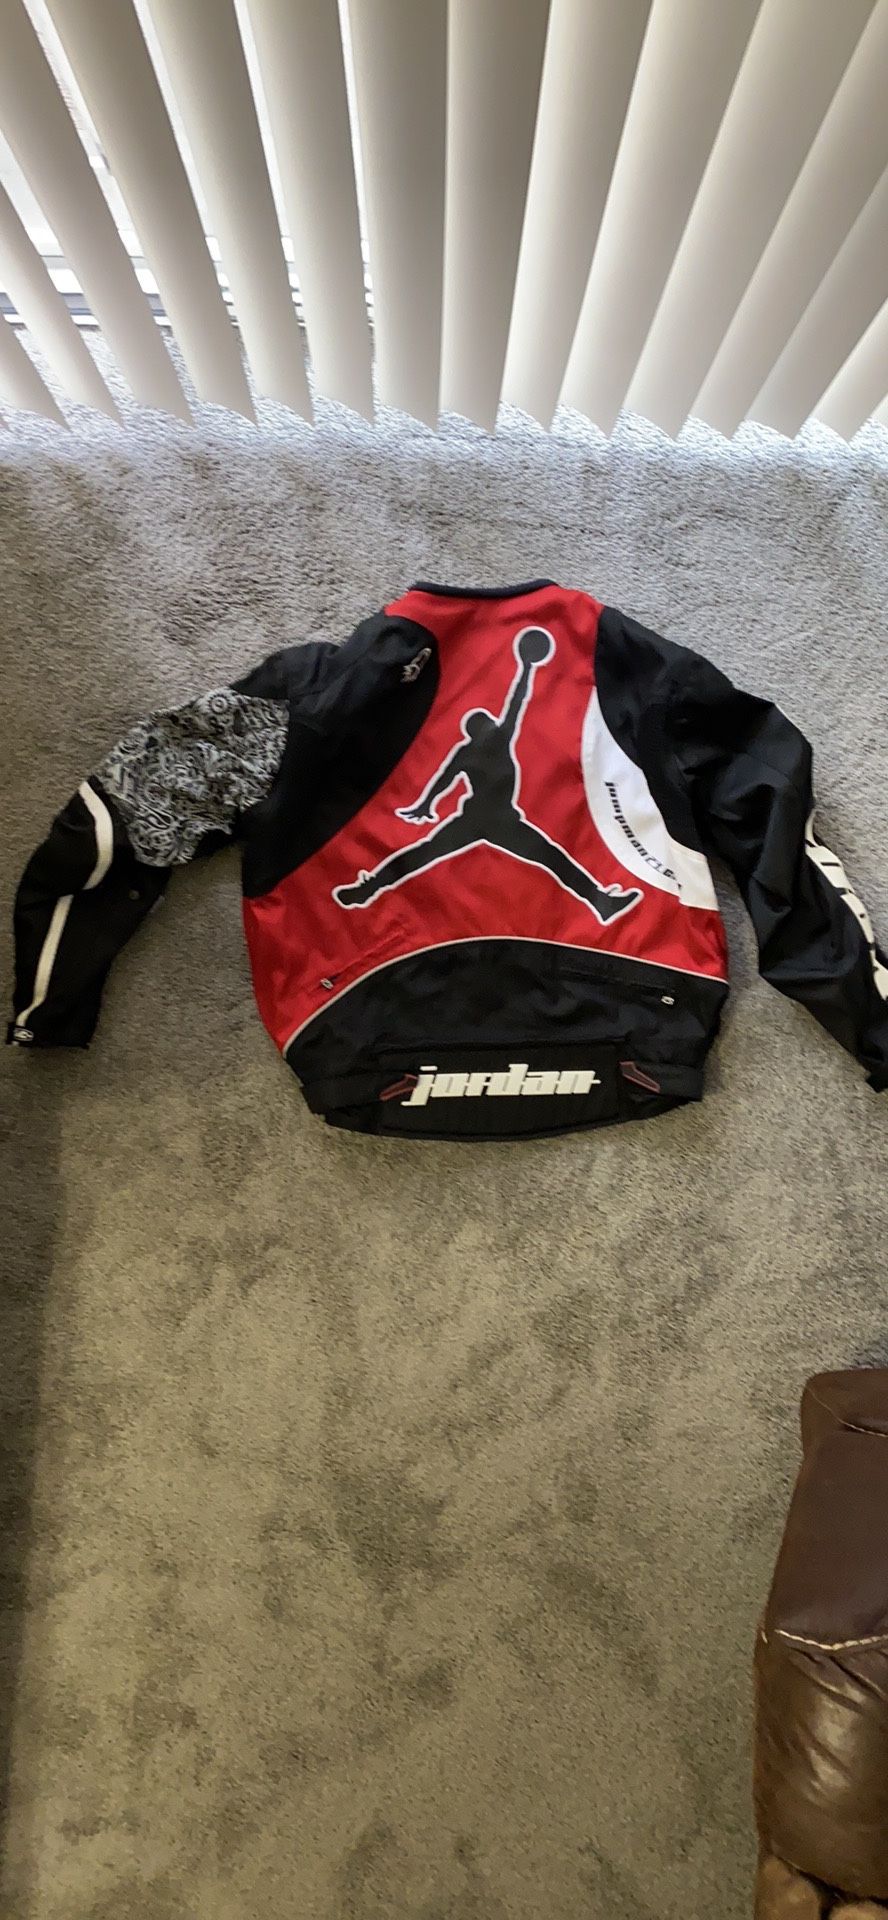 Jordan Motor Sports, Jumpman Motorcycle Jacket